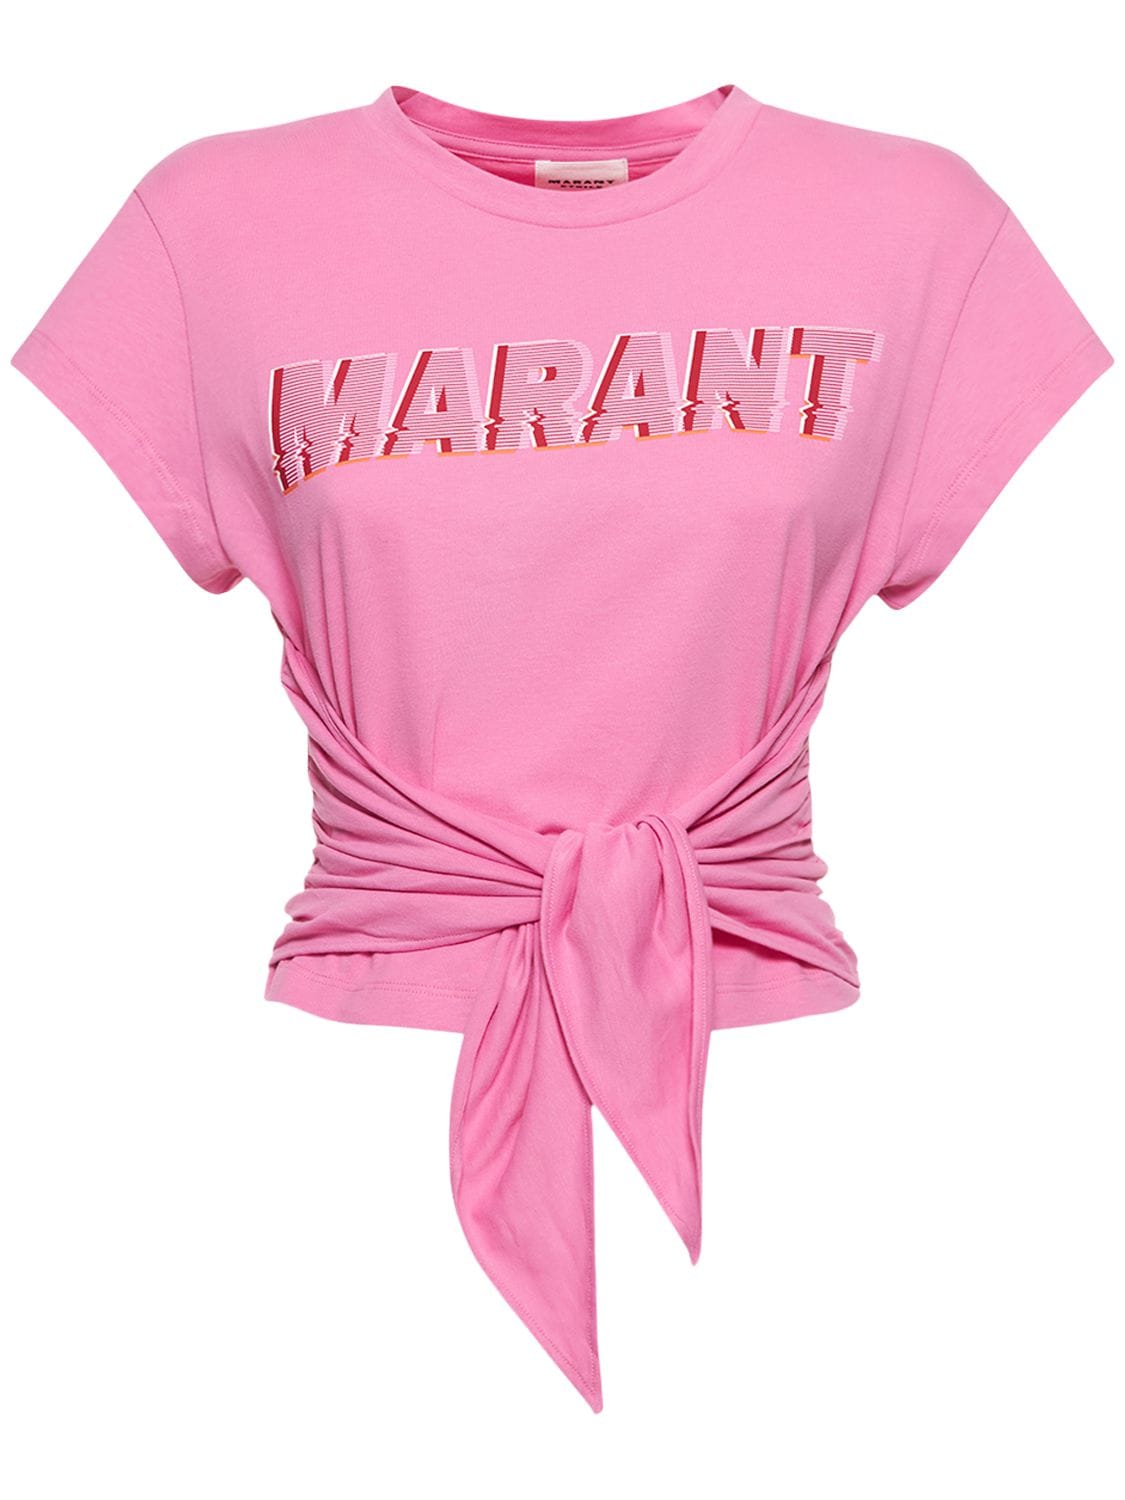 Isabel Marant cotton t-shirt